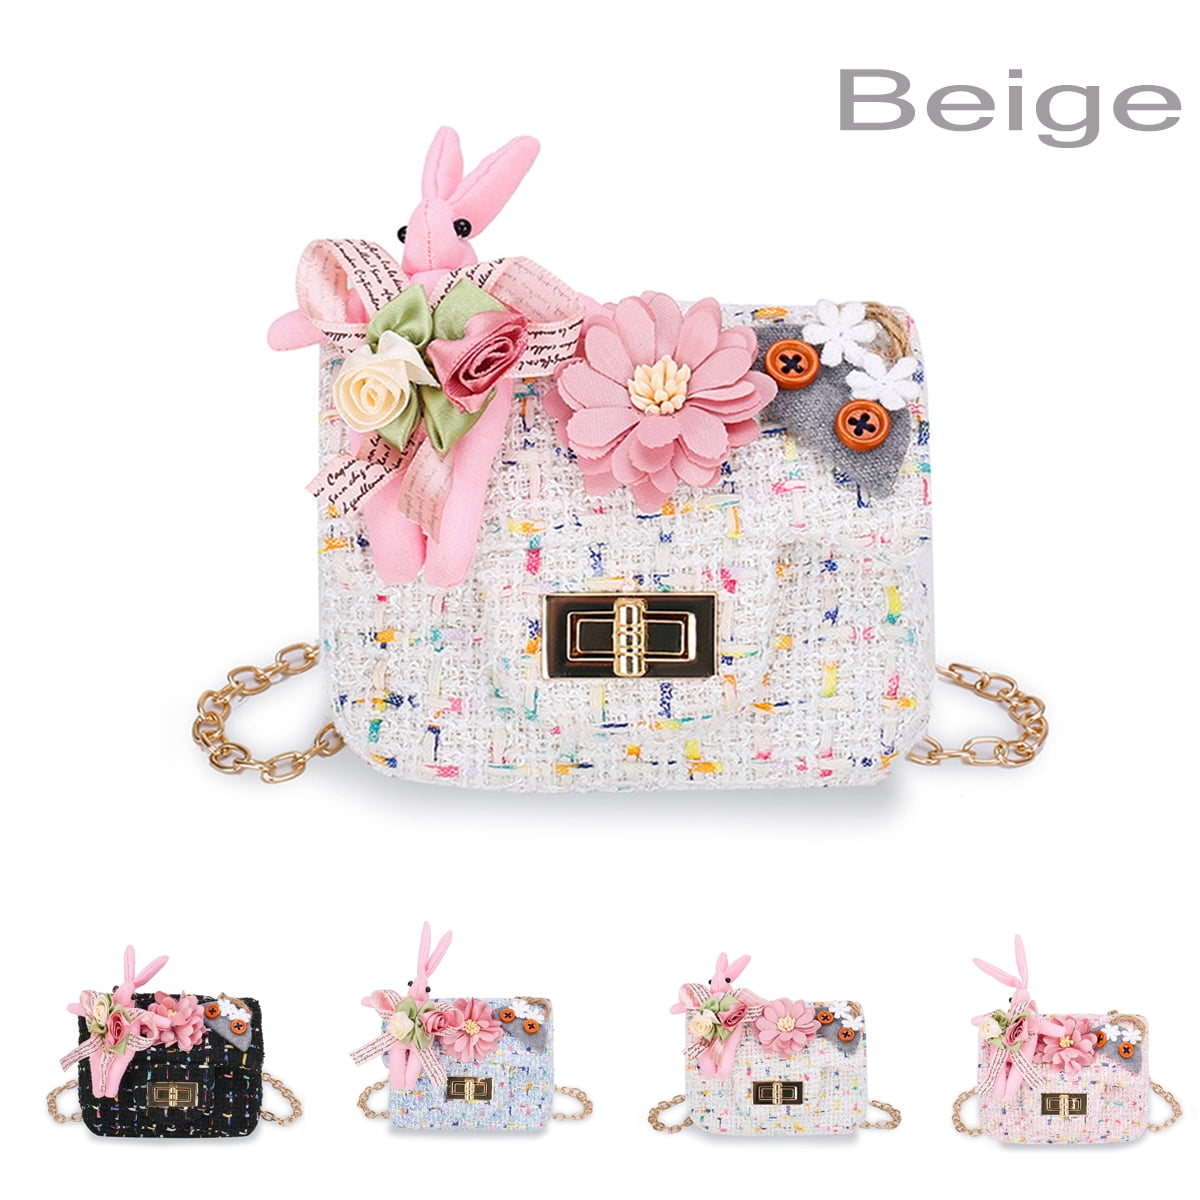 Small Fashion Purse for Little Girls Rabbit Toddler Kids Bag Cute Little Girls Handbags Beige 285bd538 6ea4 462d b921 0f85aa78be33.73973d2689db289bfd80f5263026ab3a